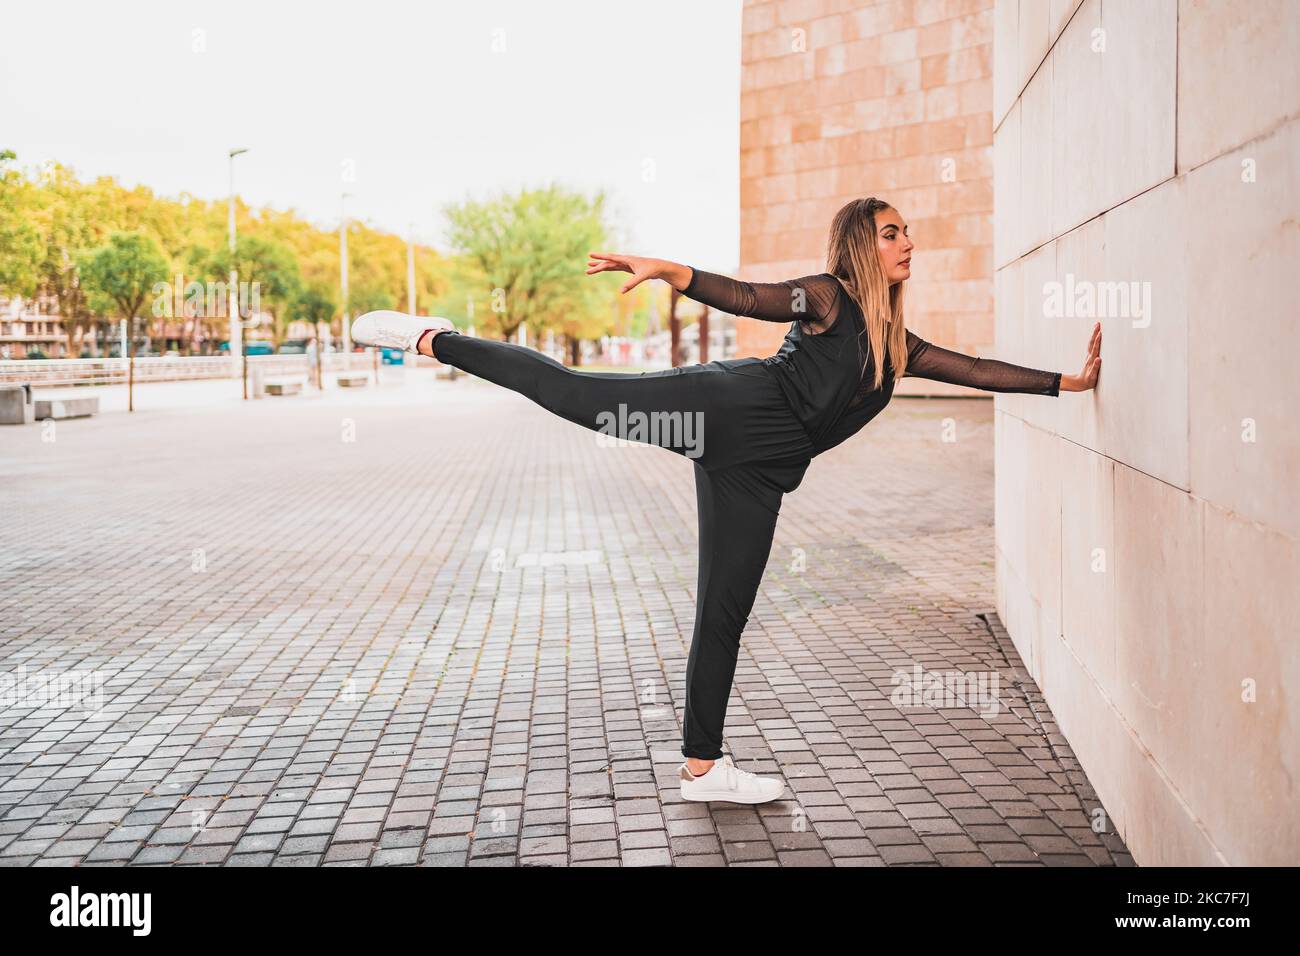 Slim woman doing yoga on street Stock Photo